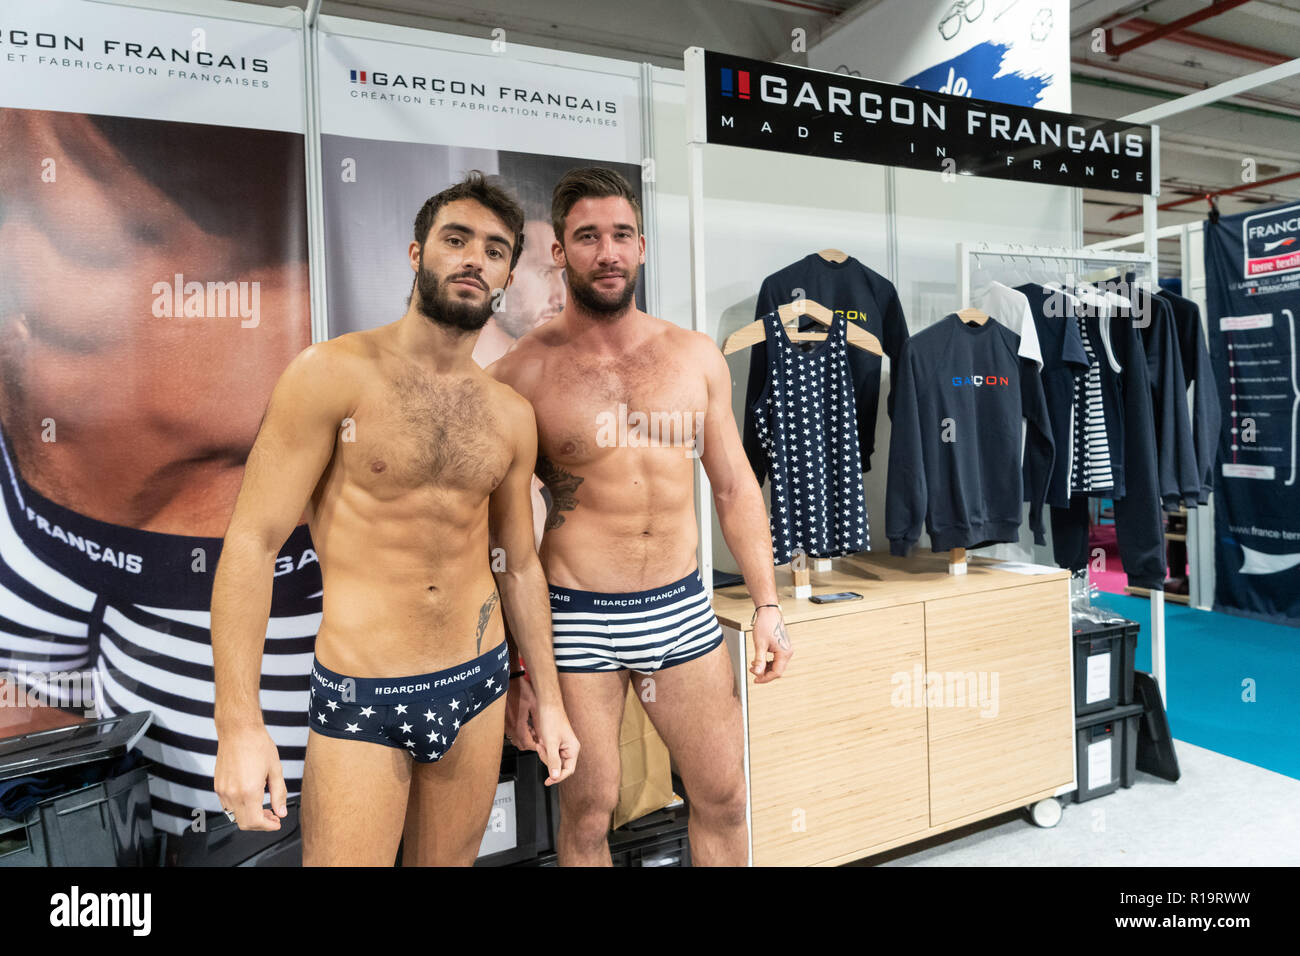 Paris, France. 10 November 2018. Two underwear models for Graçon